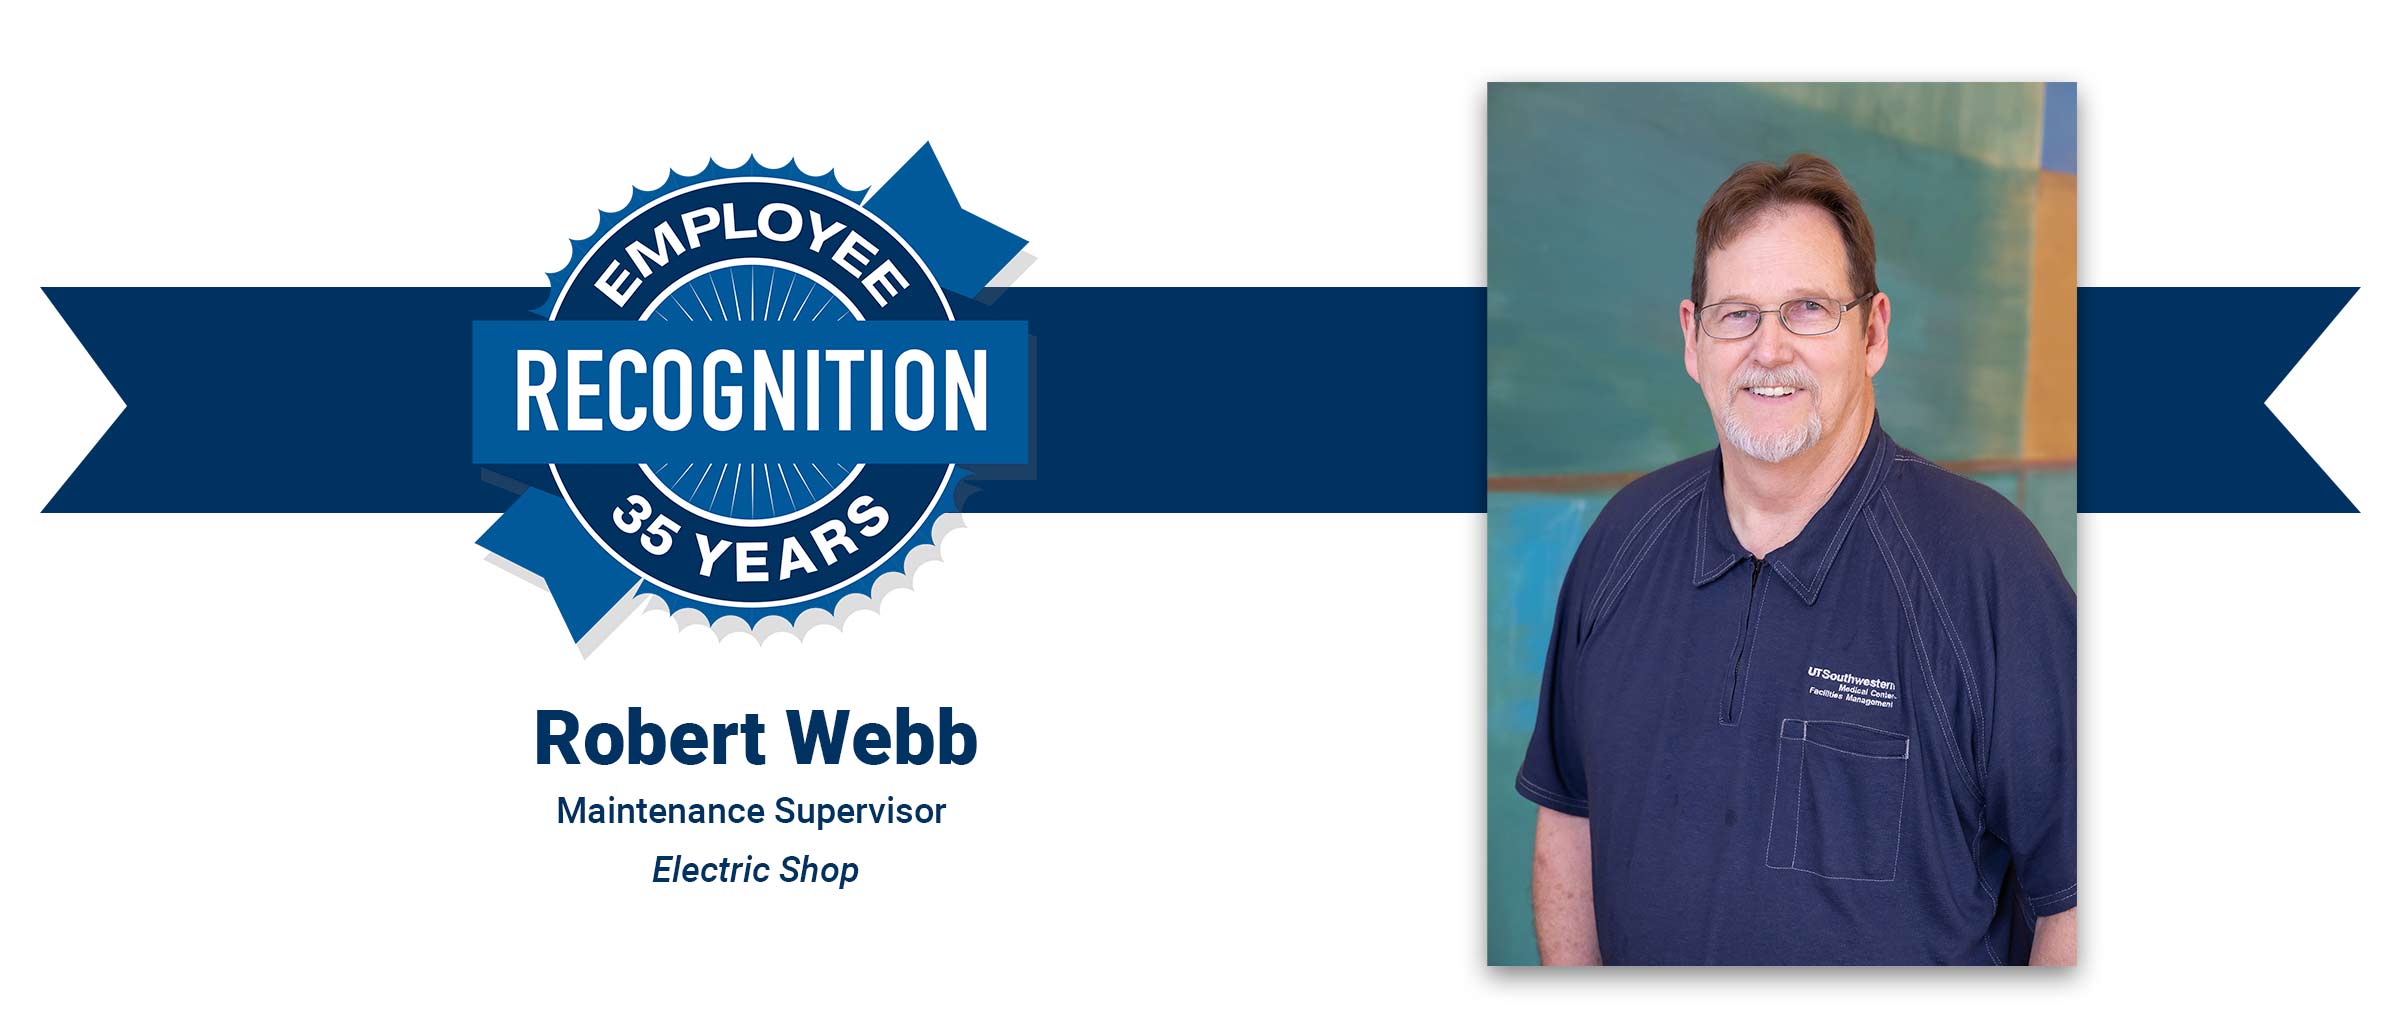 Robert Webb, photo of man, Employee Recognition 35 years emblem, Robert Webb, Maintenance supervisor, electric shop